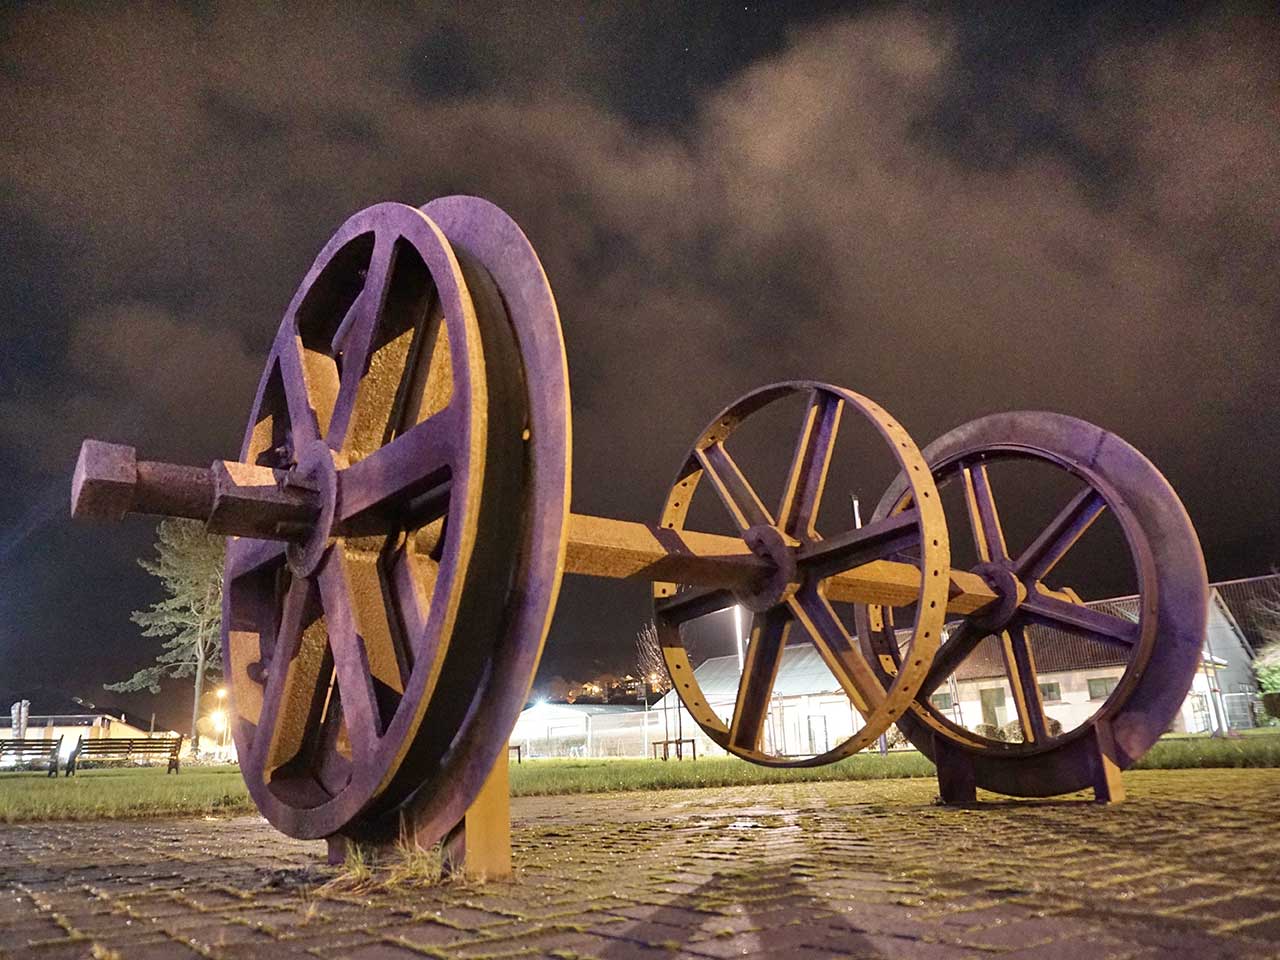 The Winding Wheel at Night